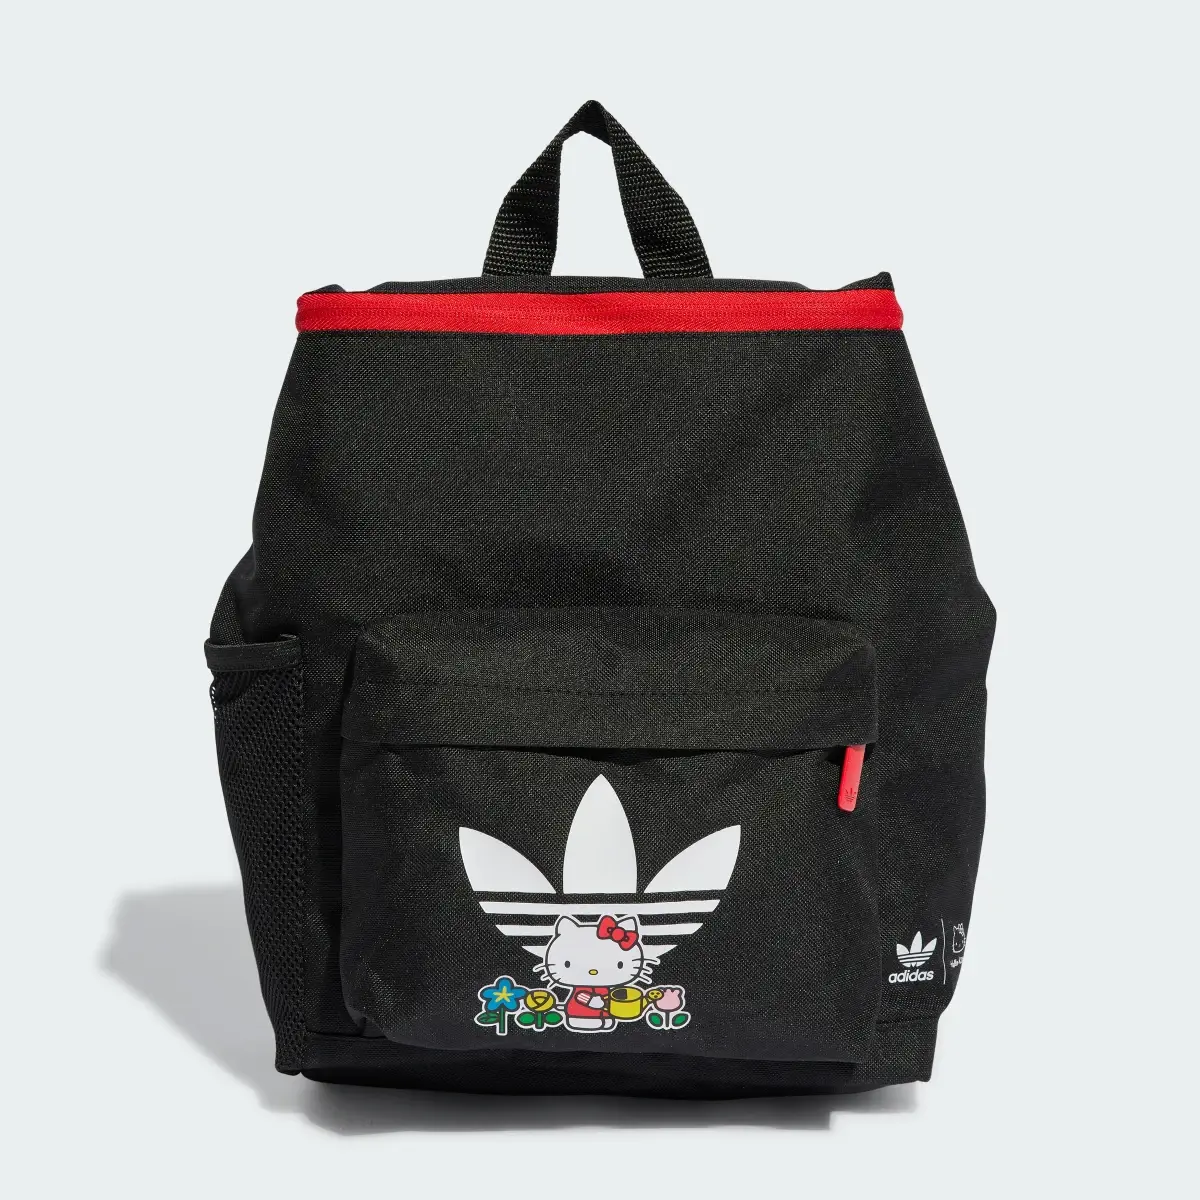 Adidas x Hello Kitty Backpack Kids. 2